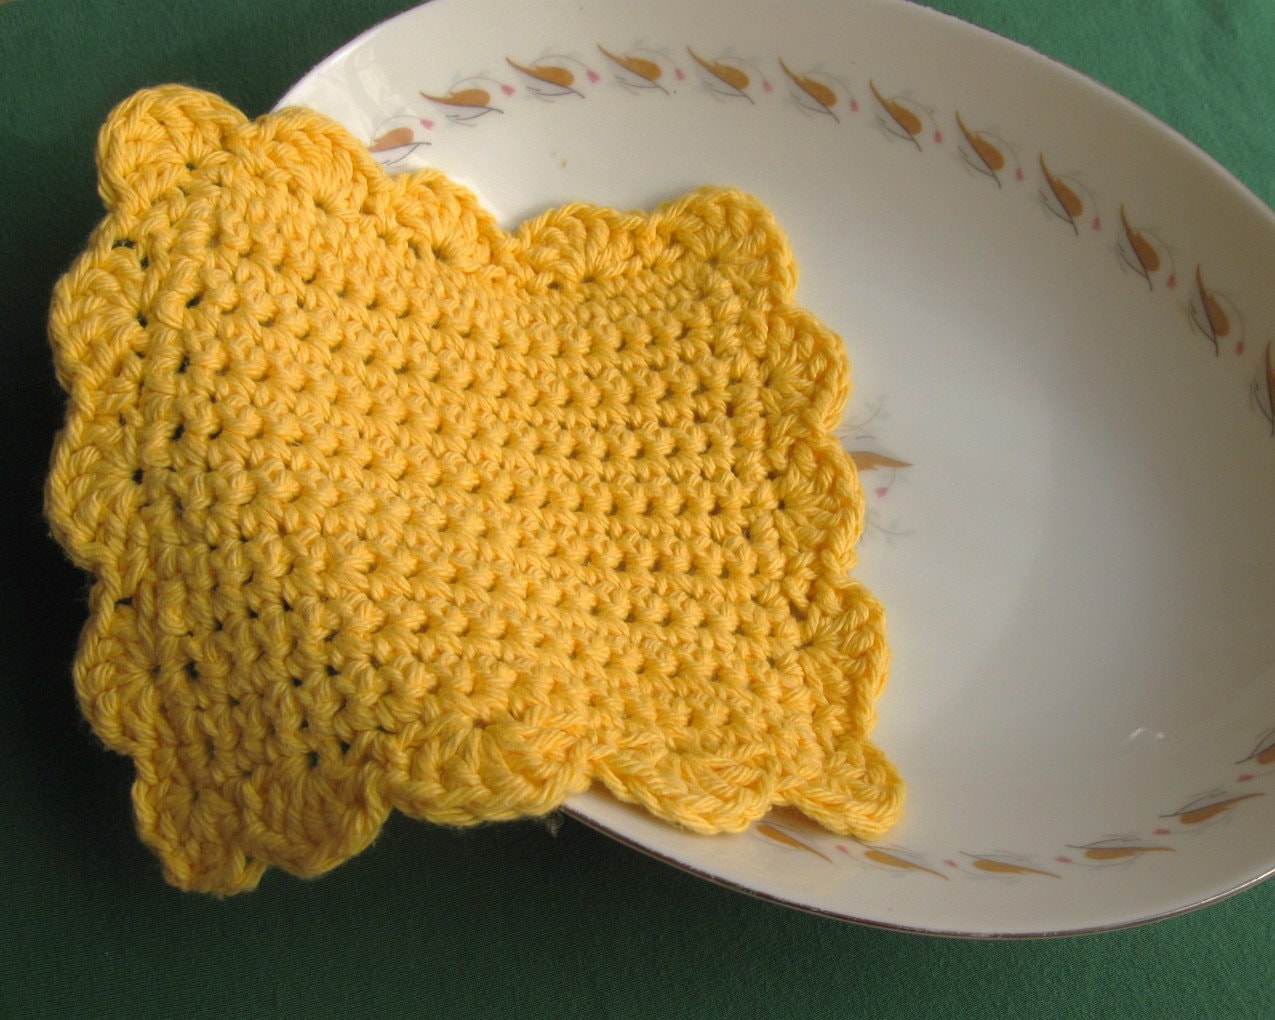 12 Curtains Doilies Tablecloth Dishrag Crochet Patterns | eBay